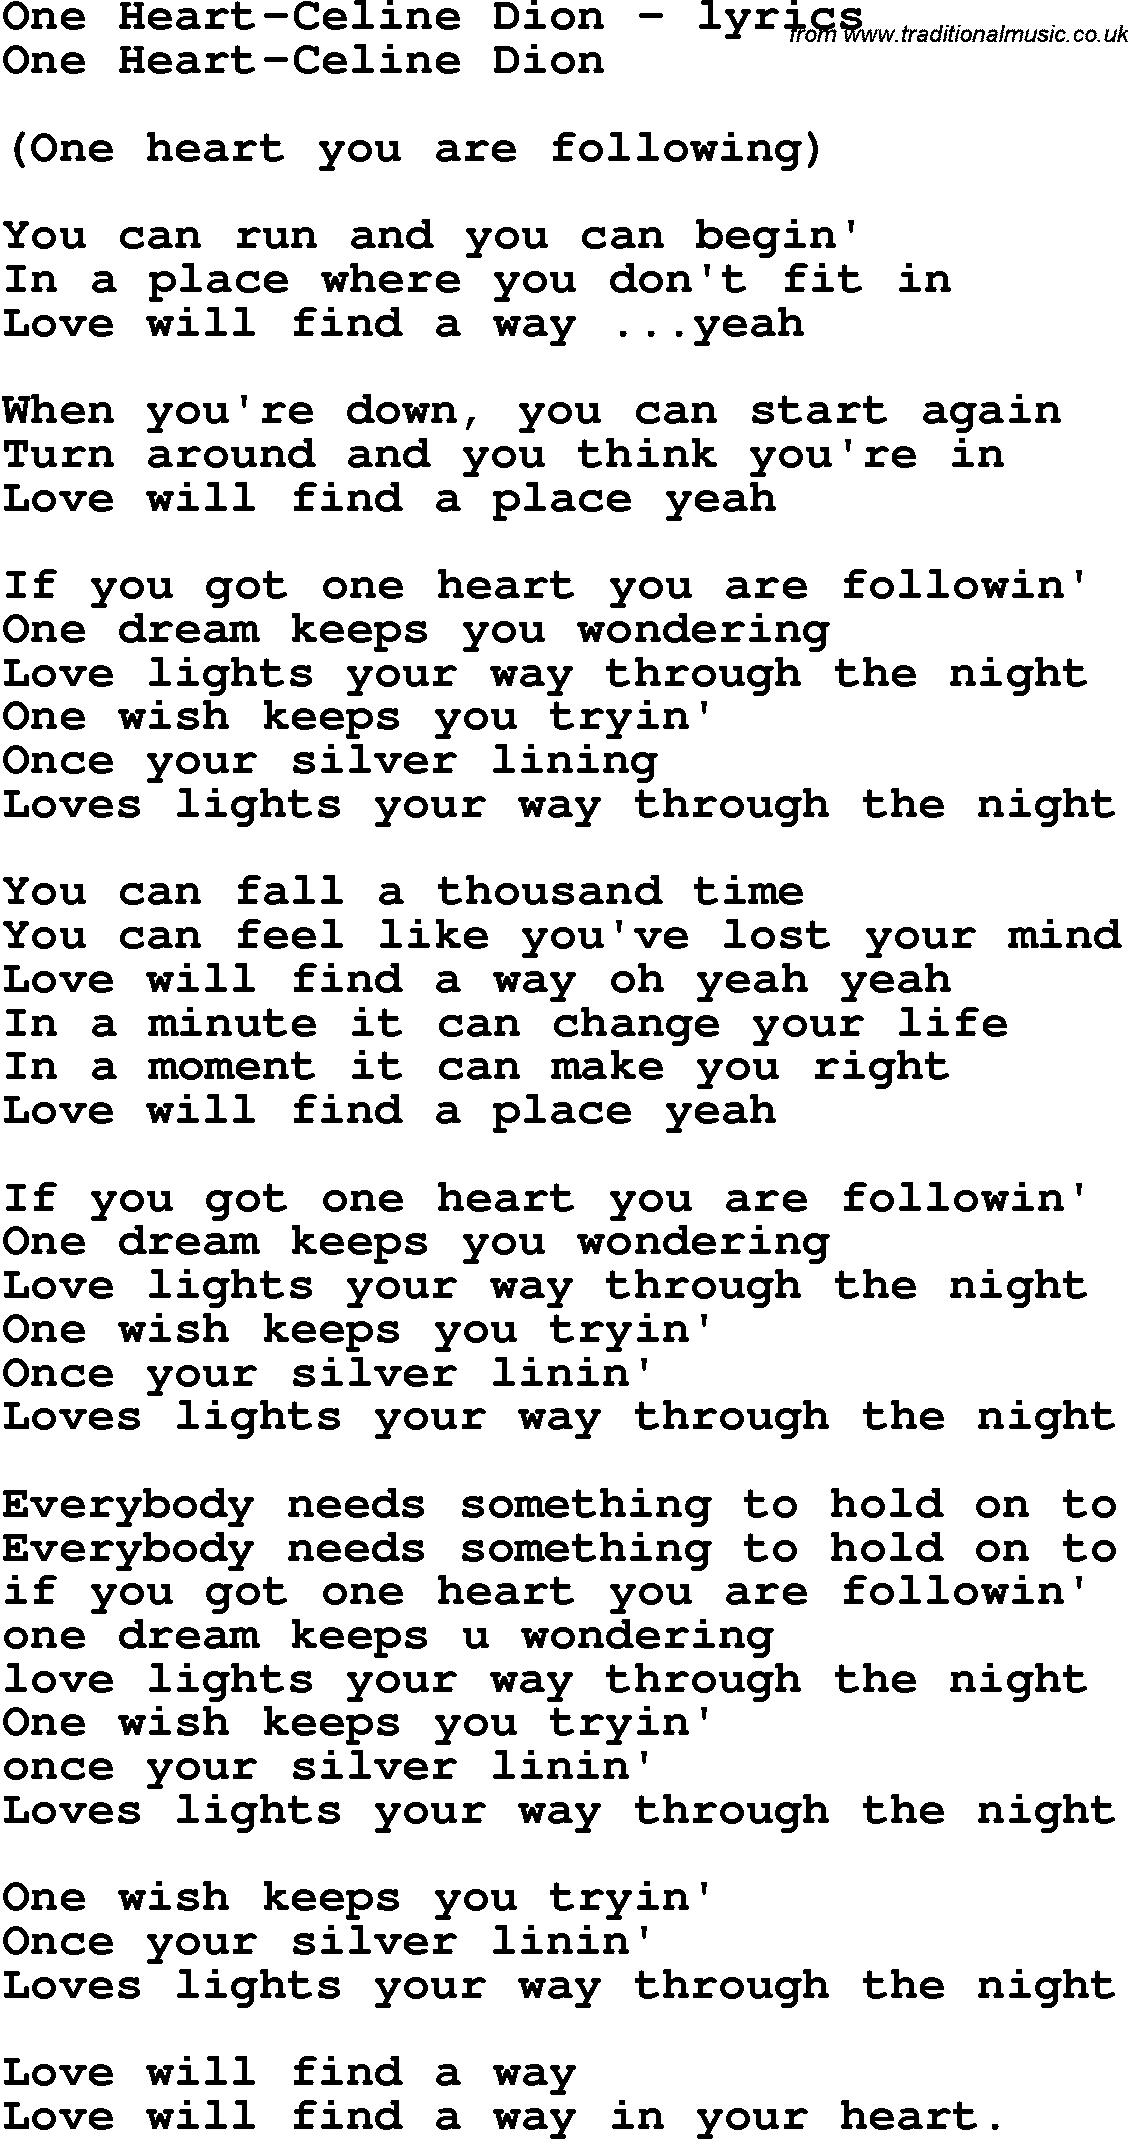 Love Song Lyrics for: One Heart-Celine Dion